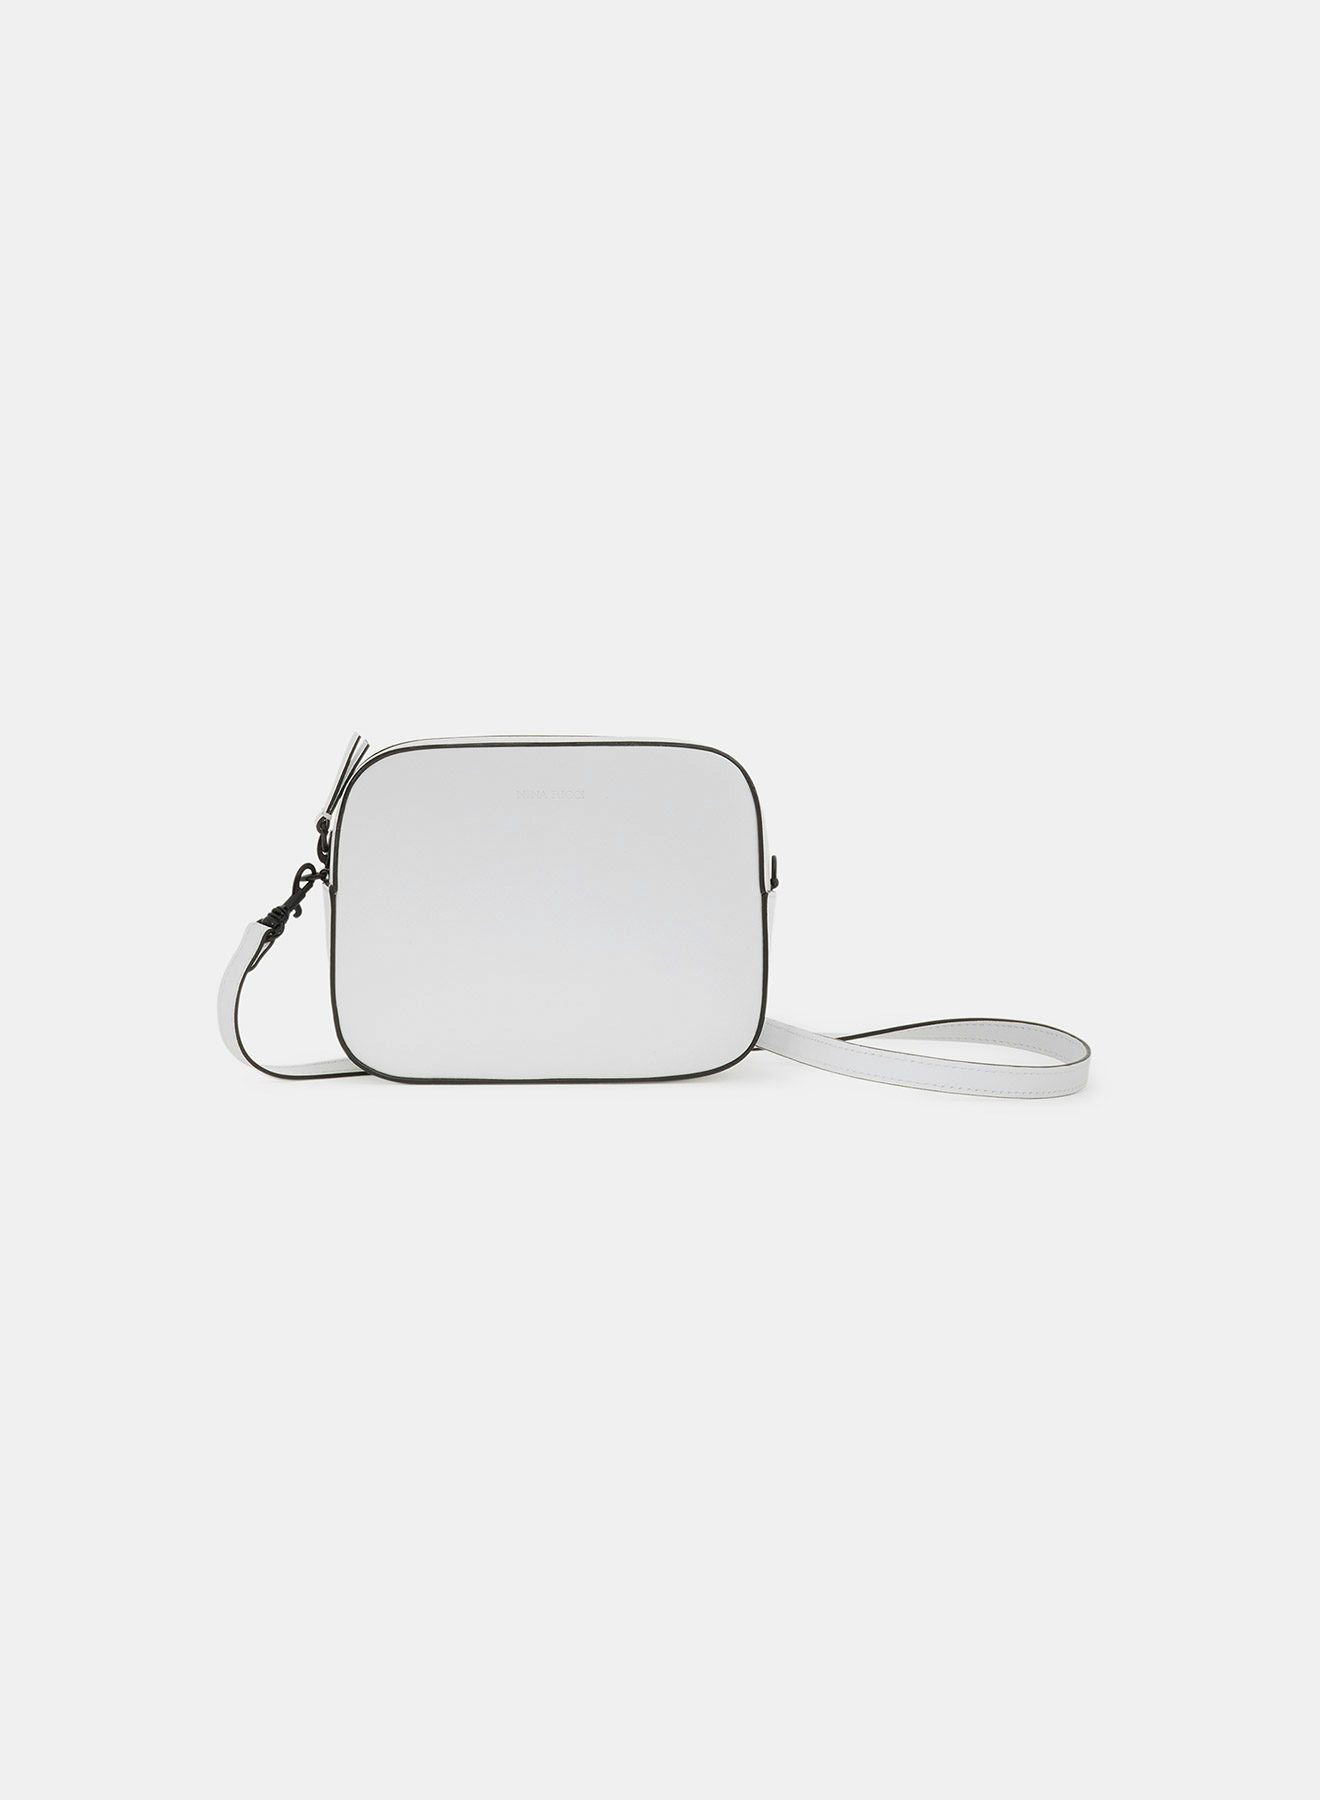 White Leather Camera Bag with Shoulder Strap - Nina Ricci